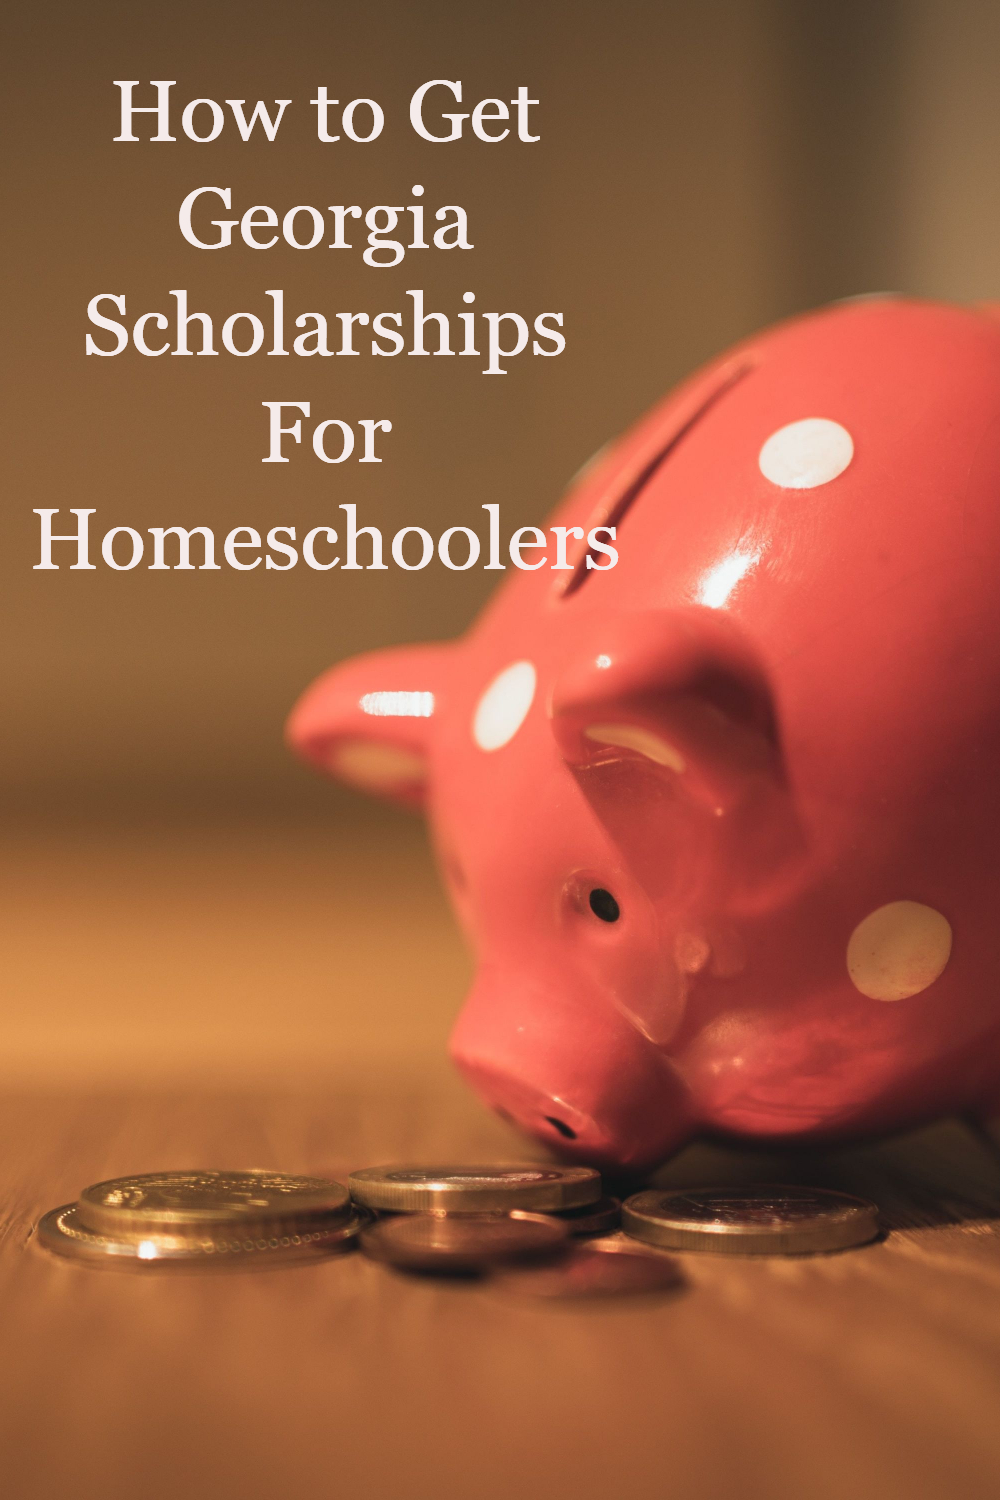 How to Get Georgia Scholarships for Homeschoolers